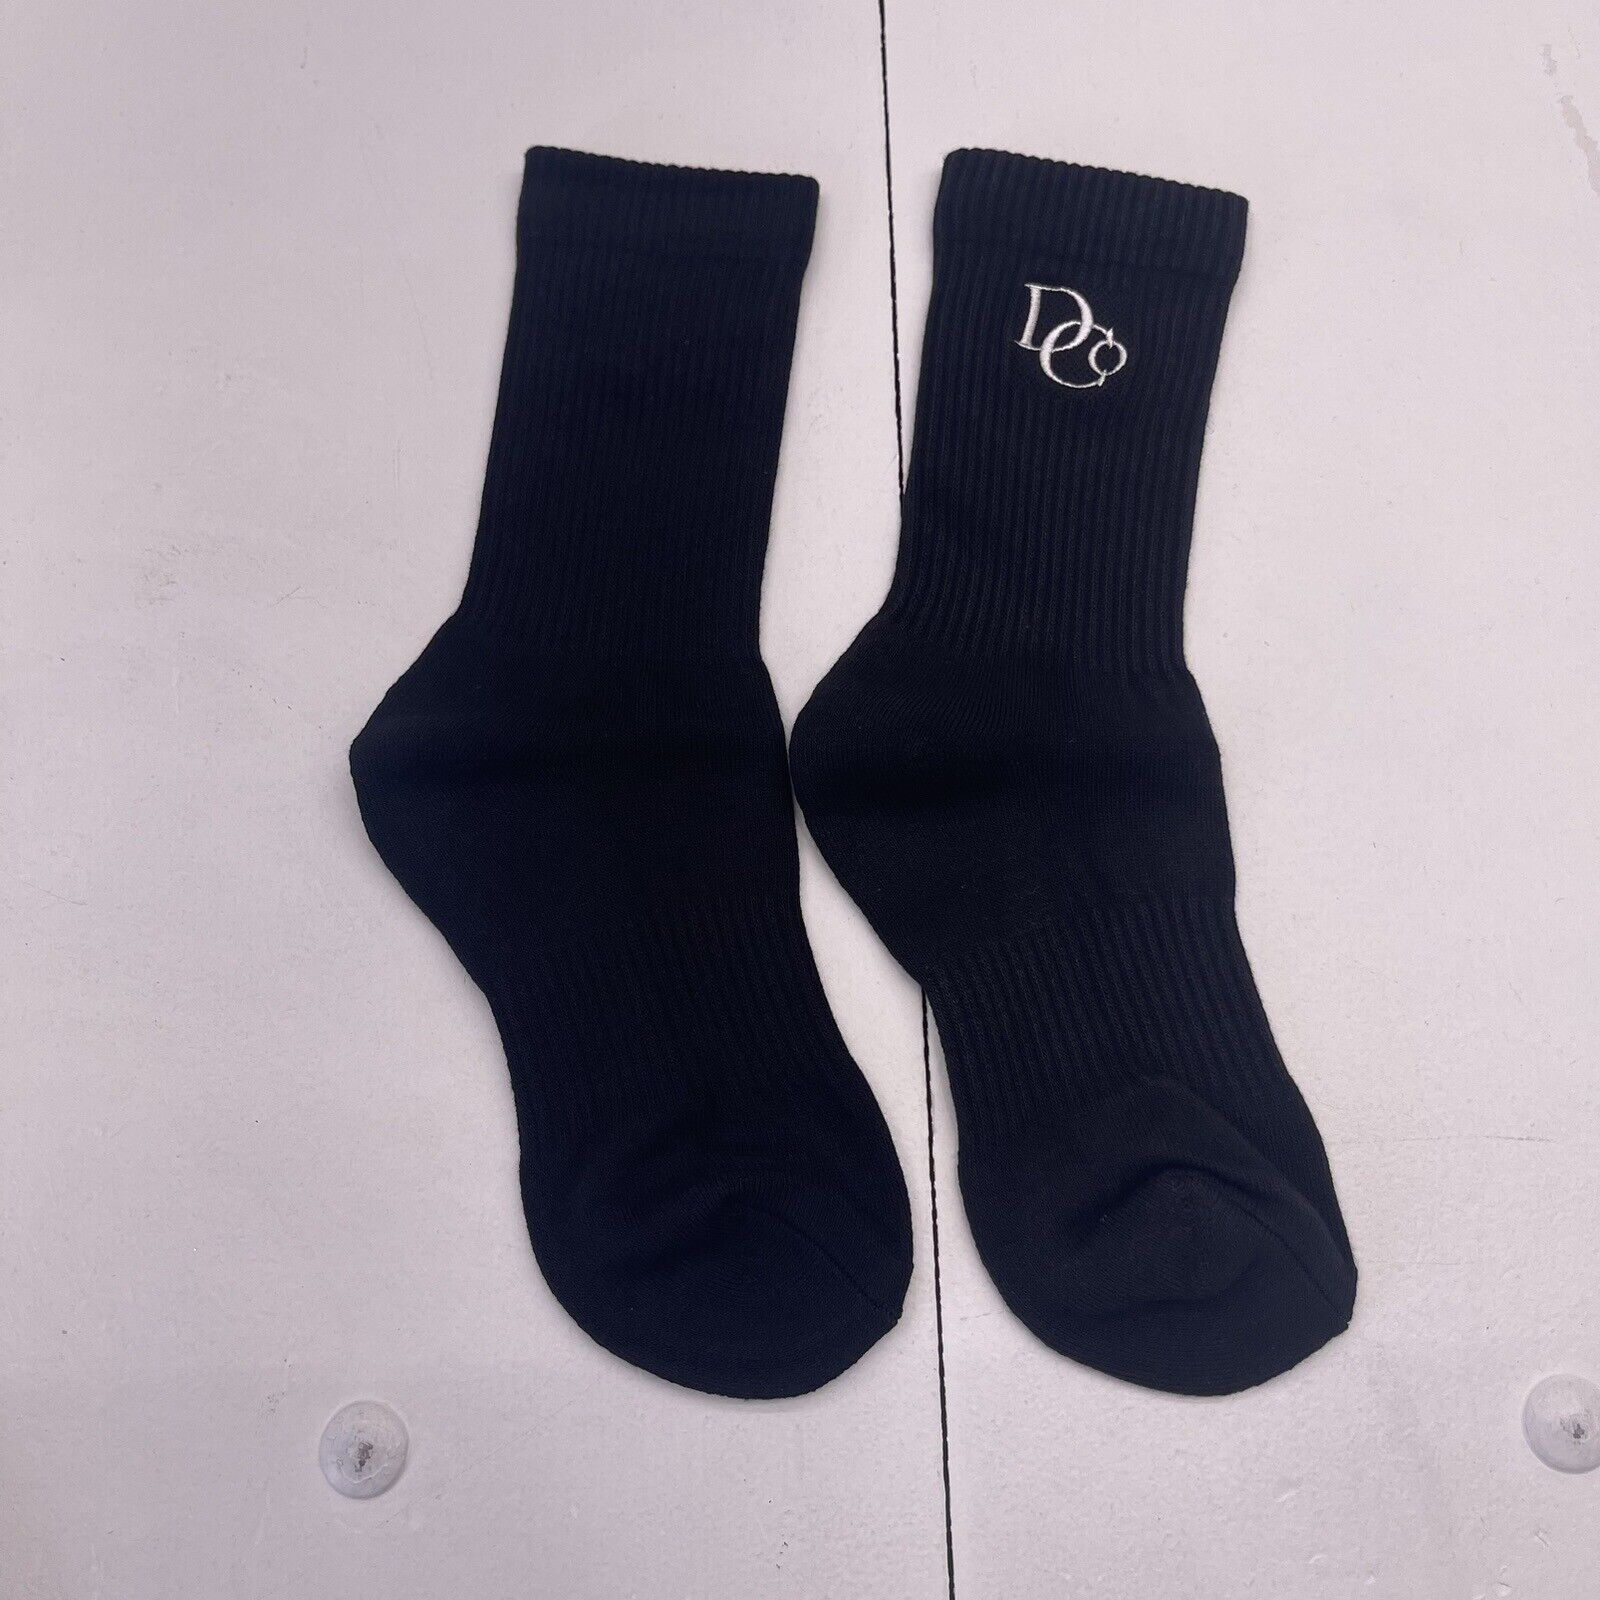 Draco Slides Black Crew Socks Mens Size OS New